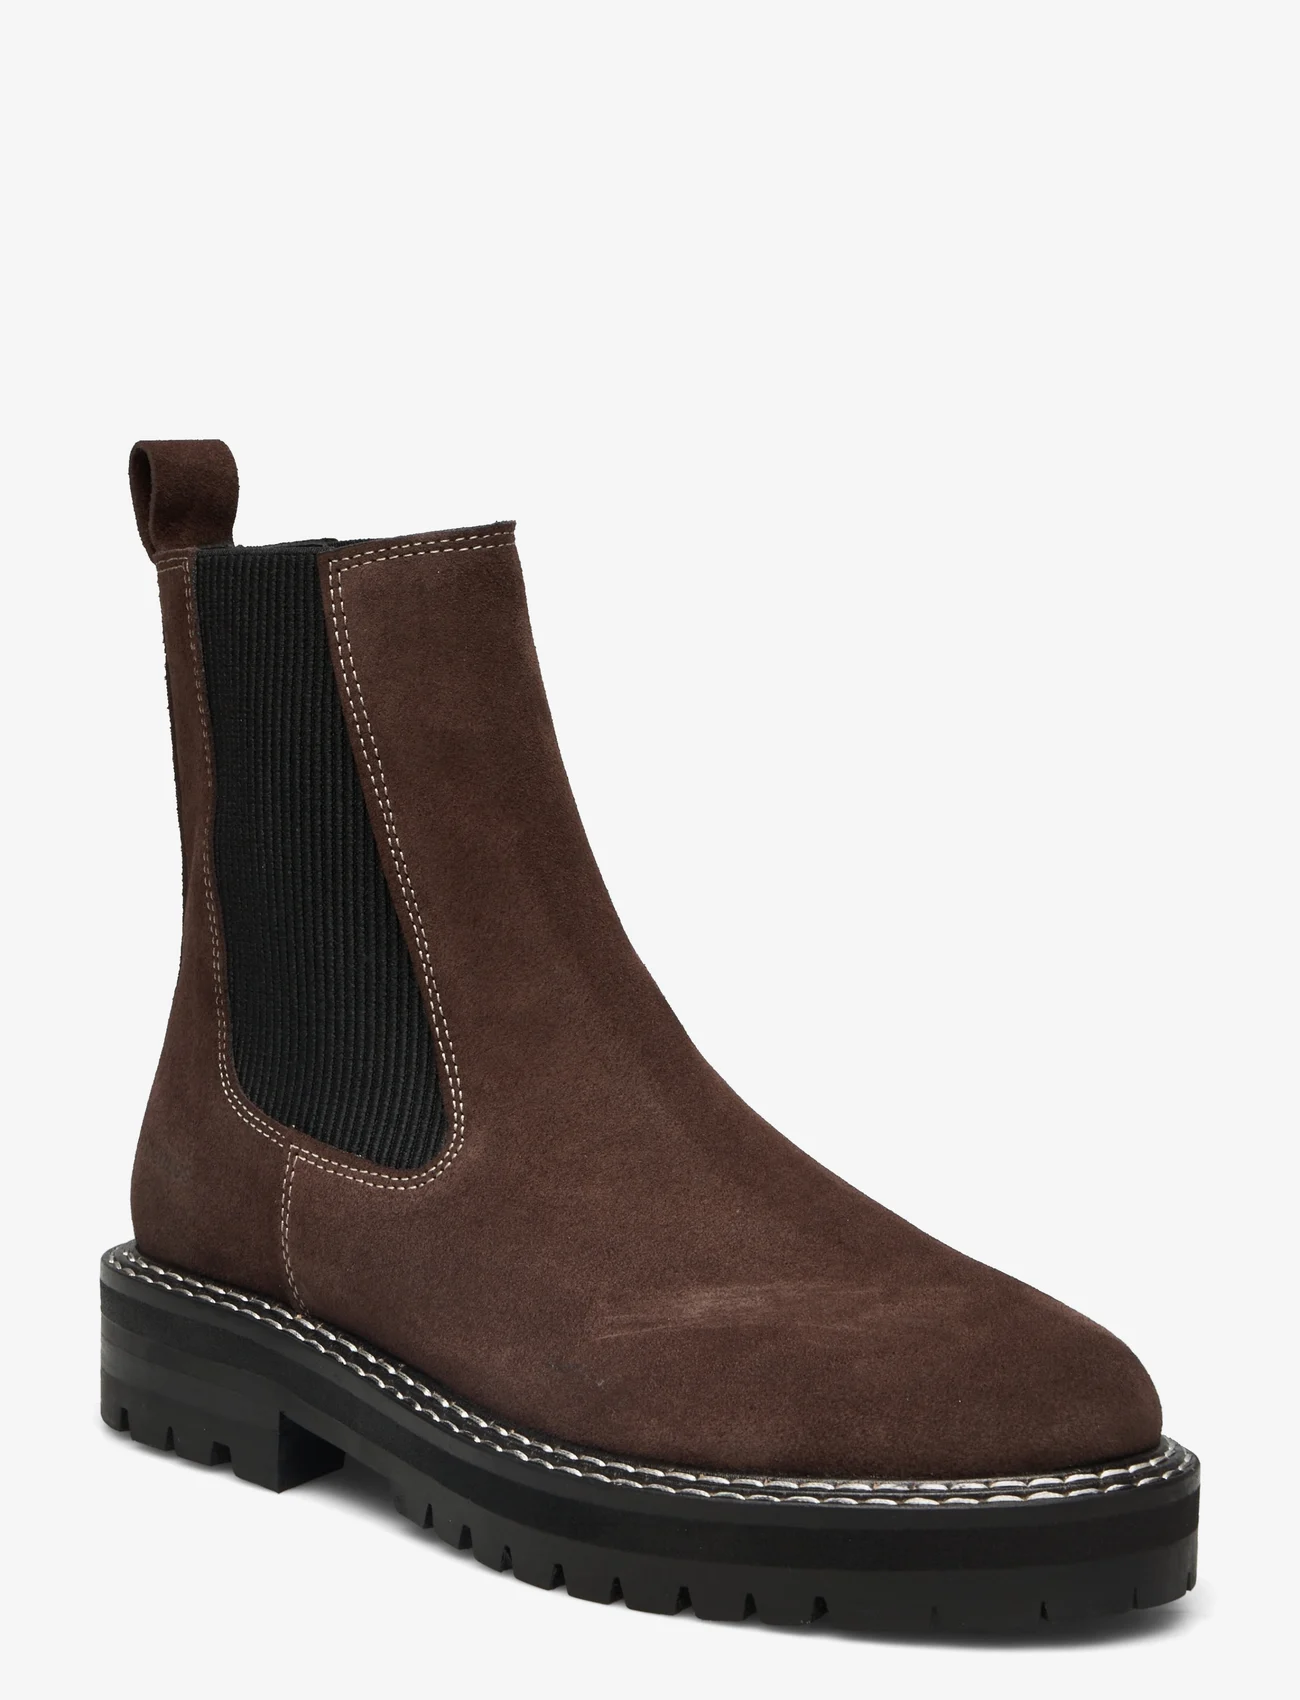 ANGULUS - Boots - flat - chelsea stila zābaki - 1718/019 brown/black - 0